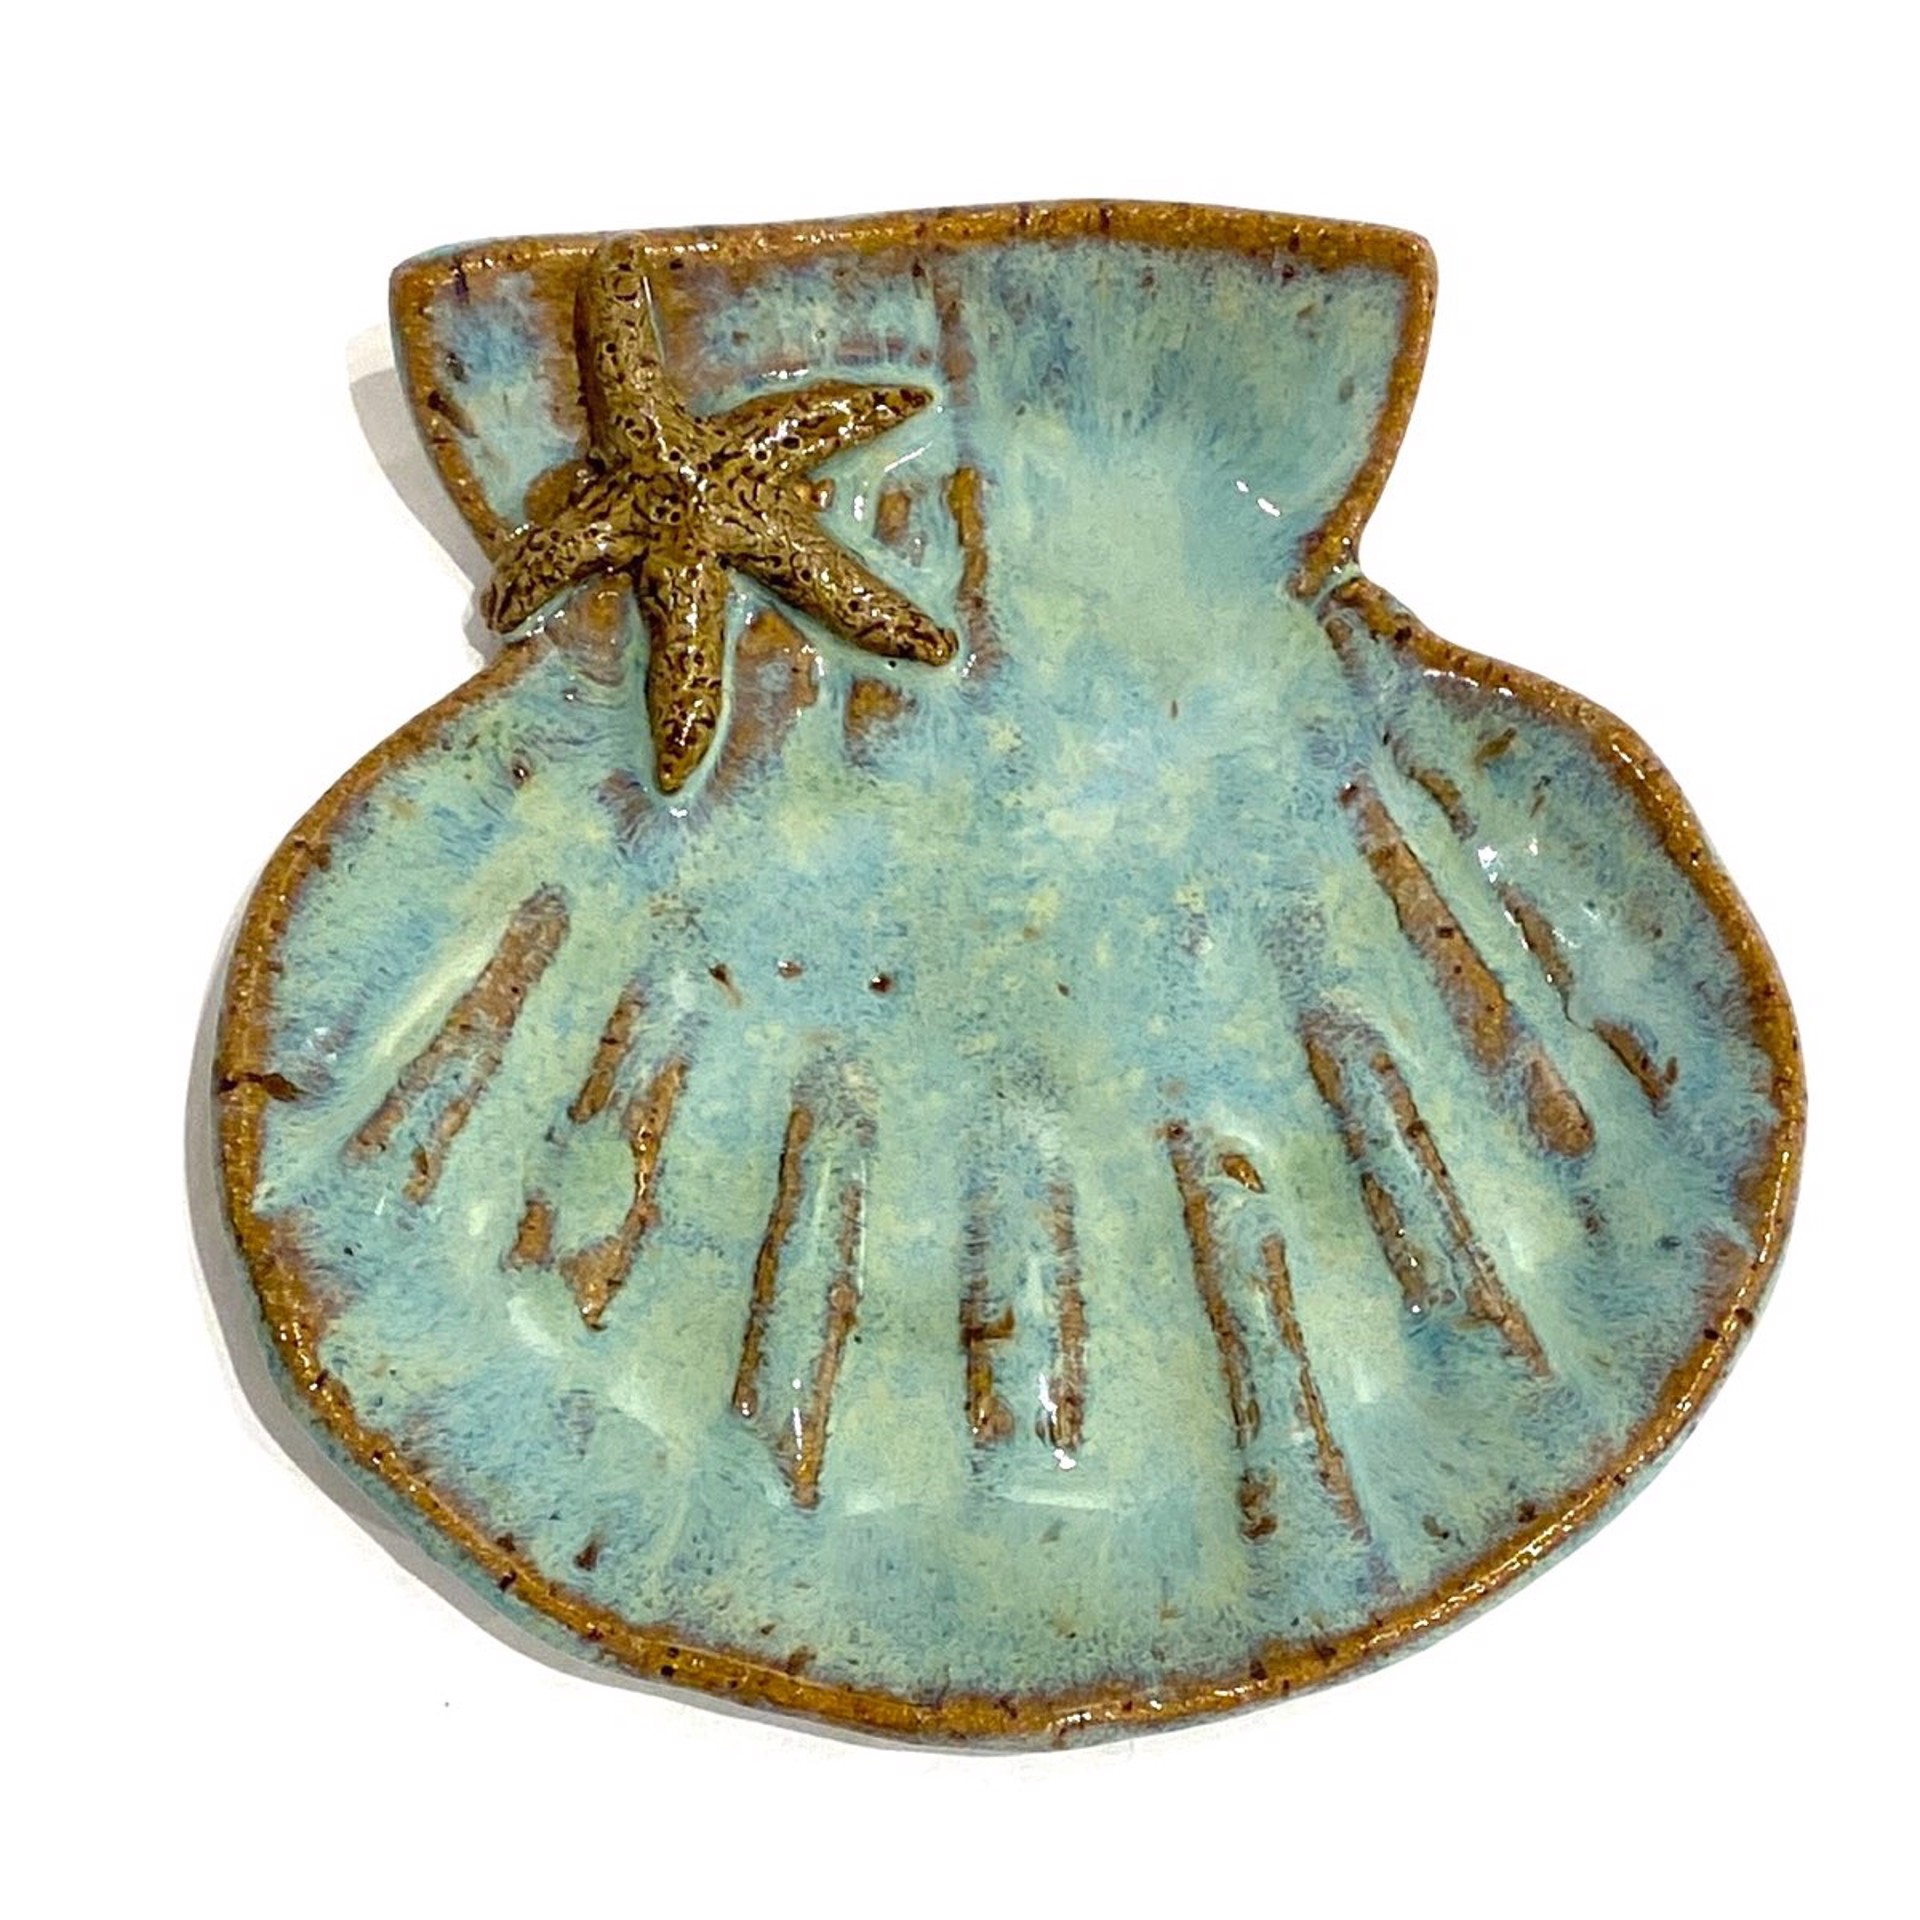 LG23-984 Shell Dish with Starfish (Green Glaze) by Jim & Steffi Logan